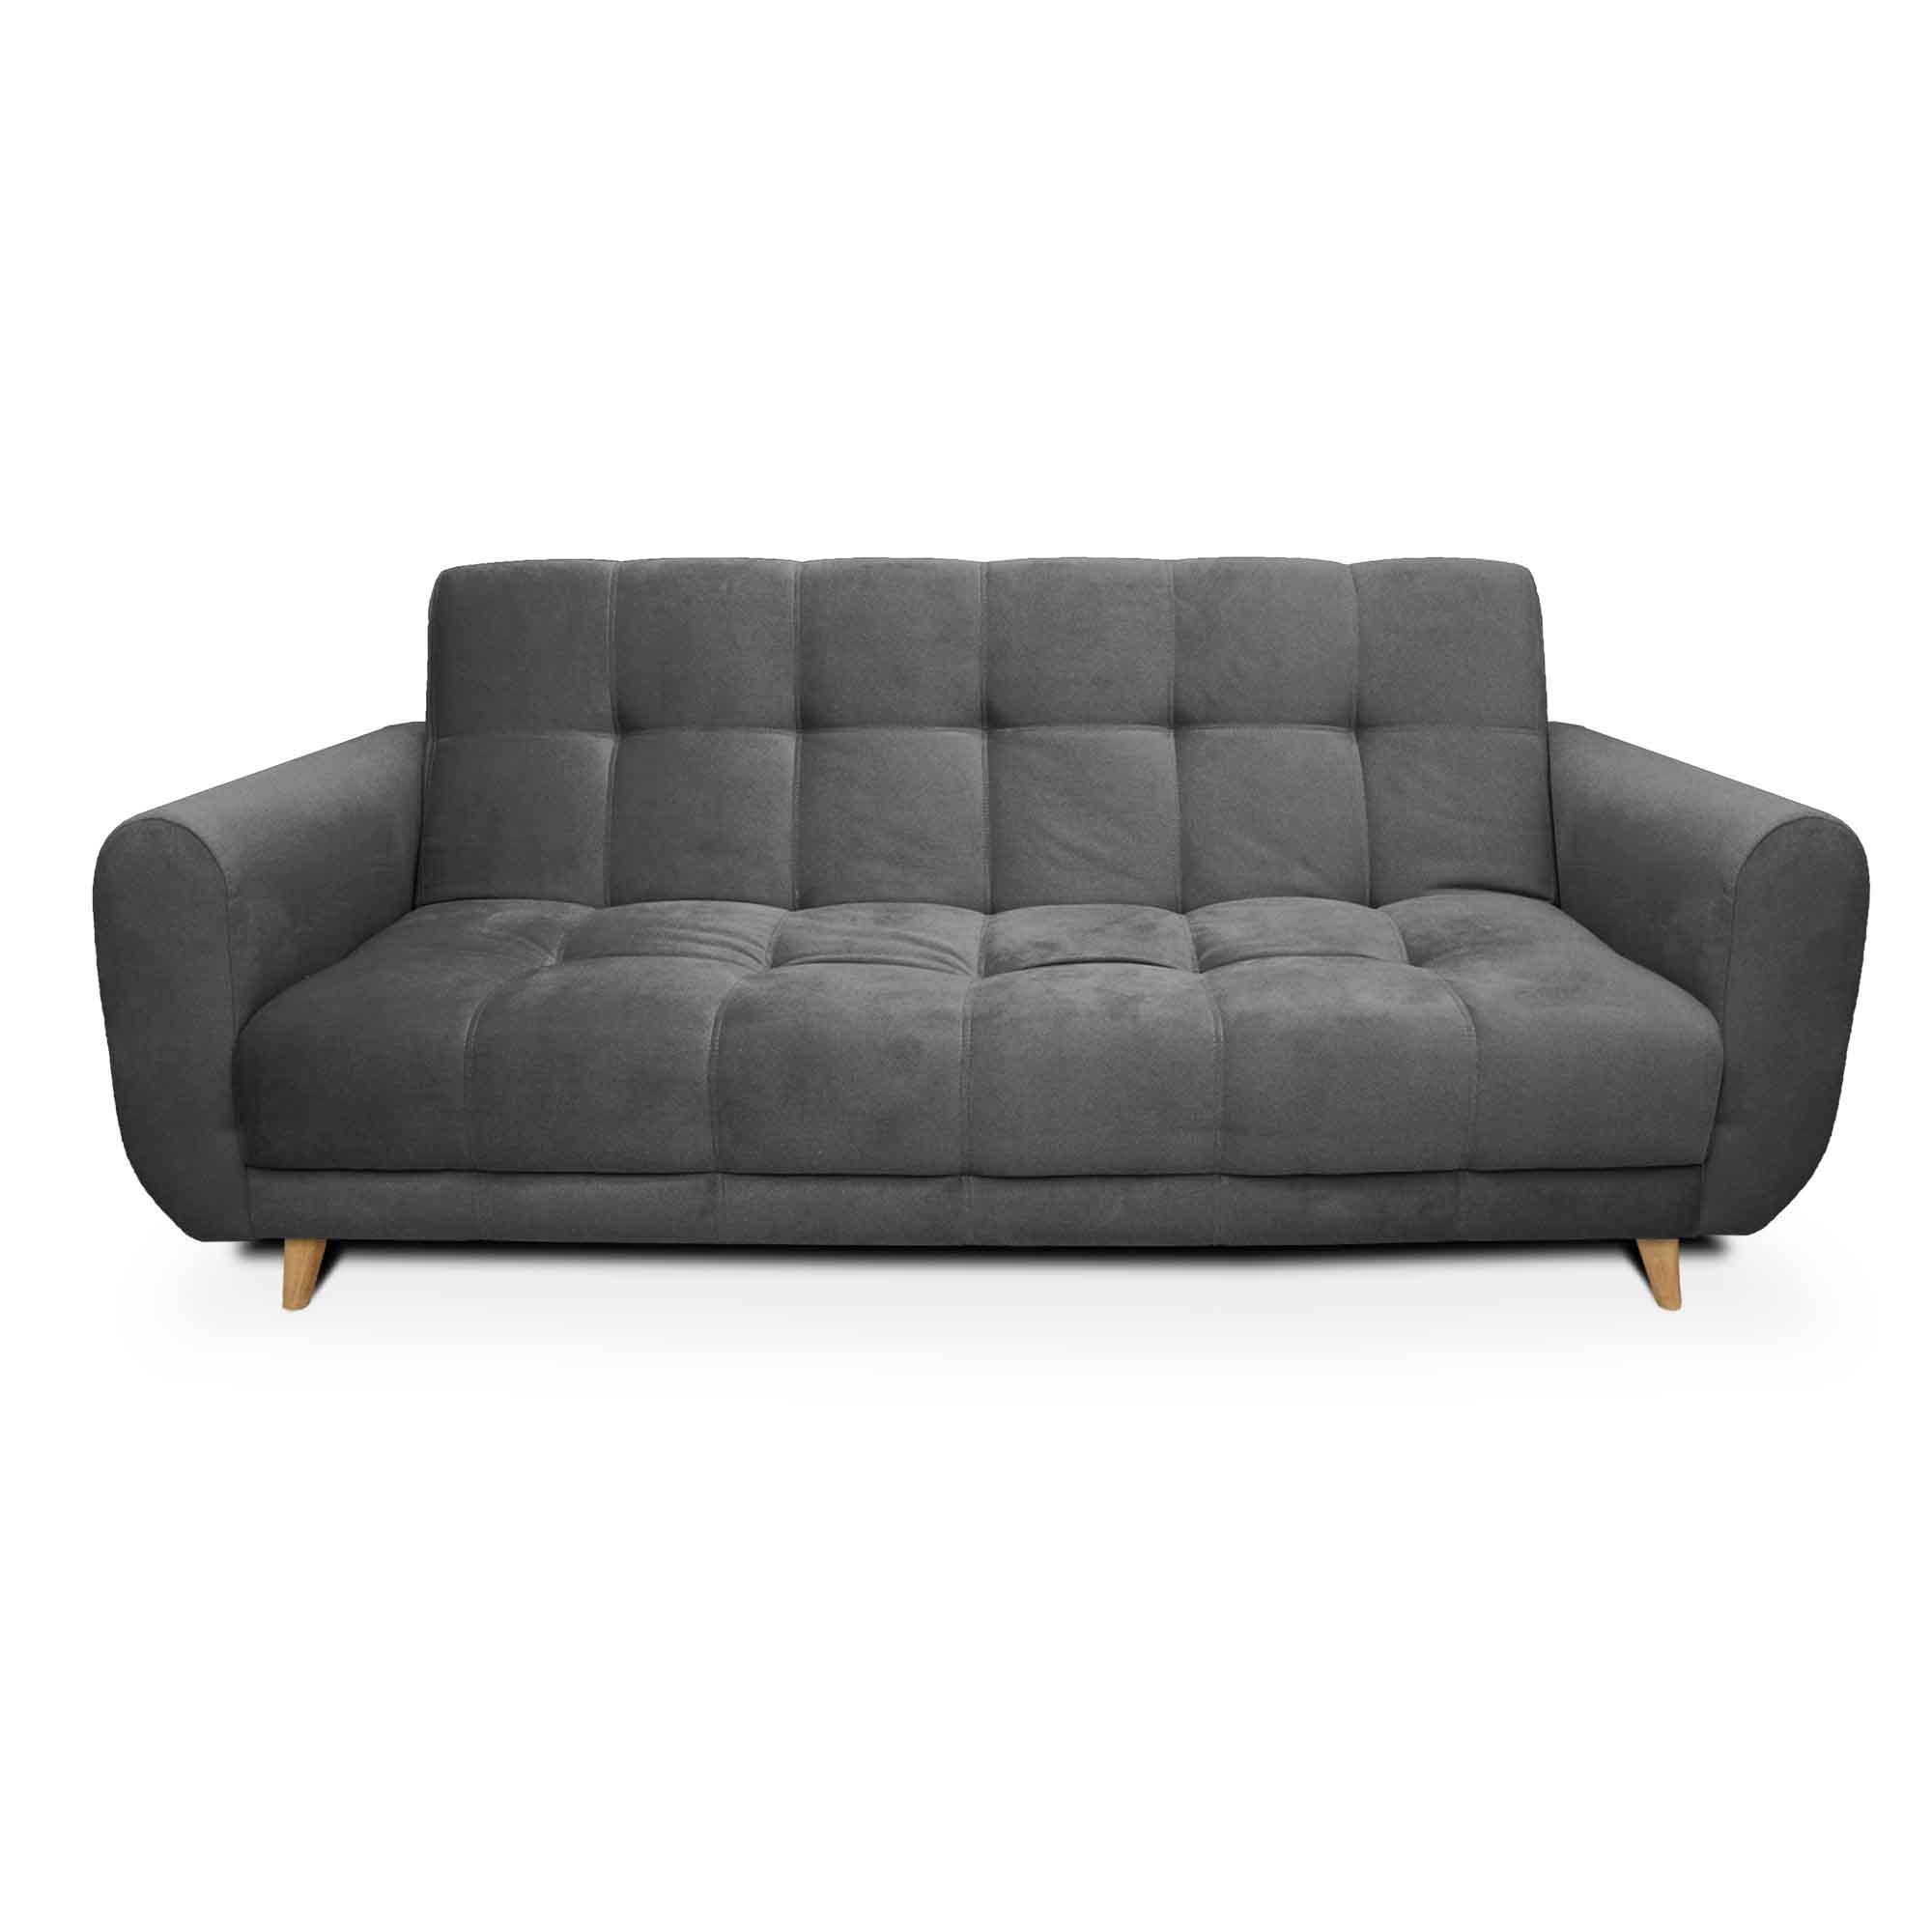 Sofa Cama Comfort Sistema Clic Clac Color Gris (1)